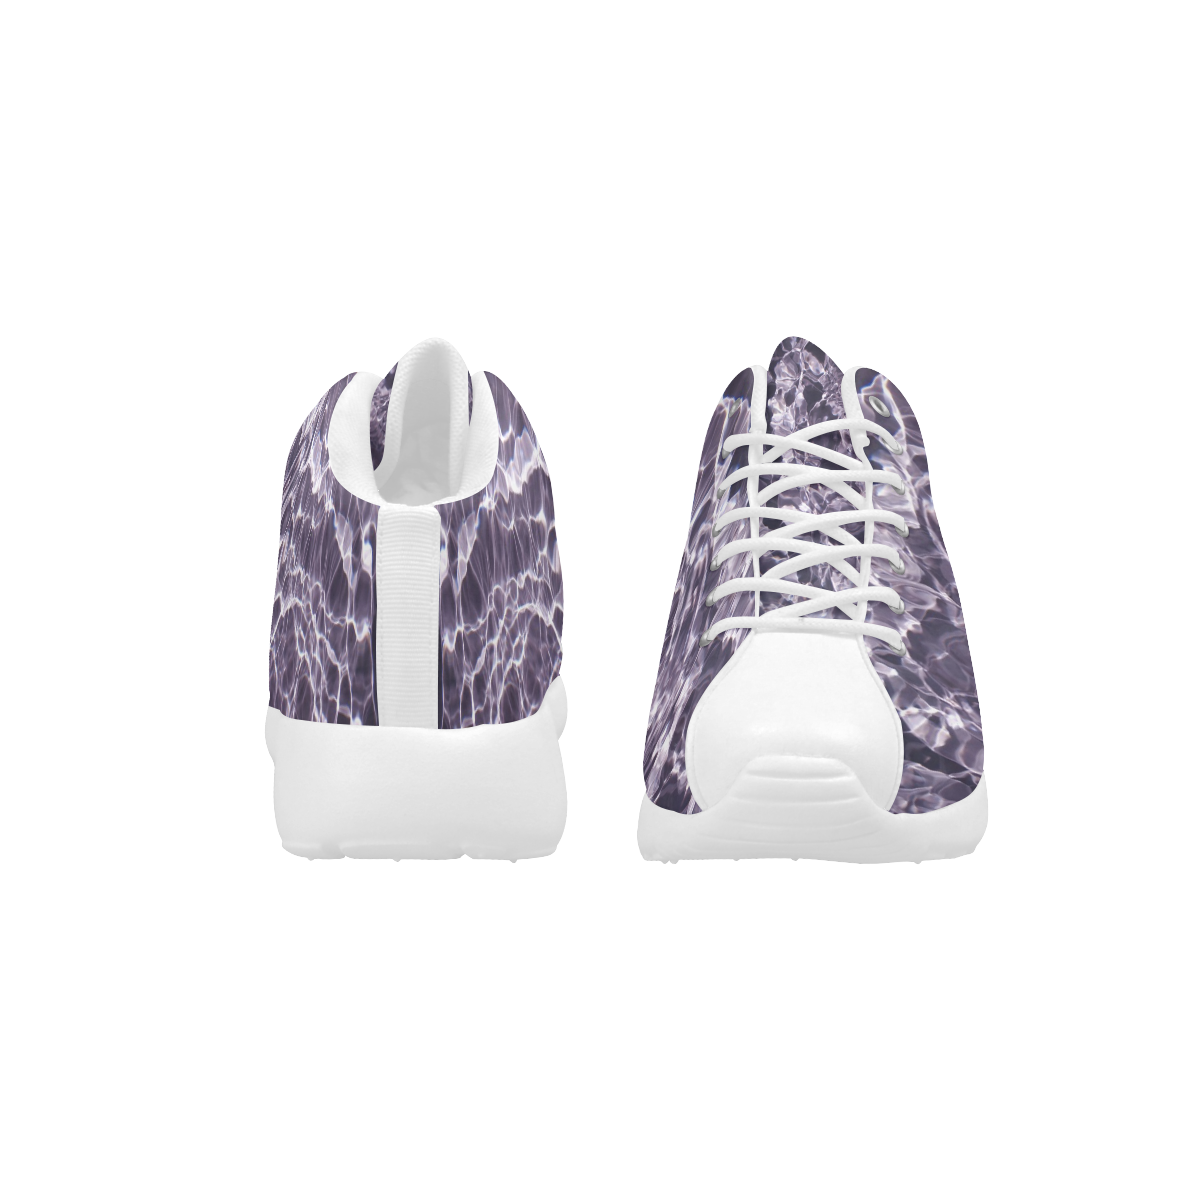 Violaceous soul Women's Basketball Training Shoes (Model 47502)